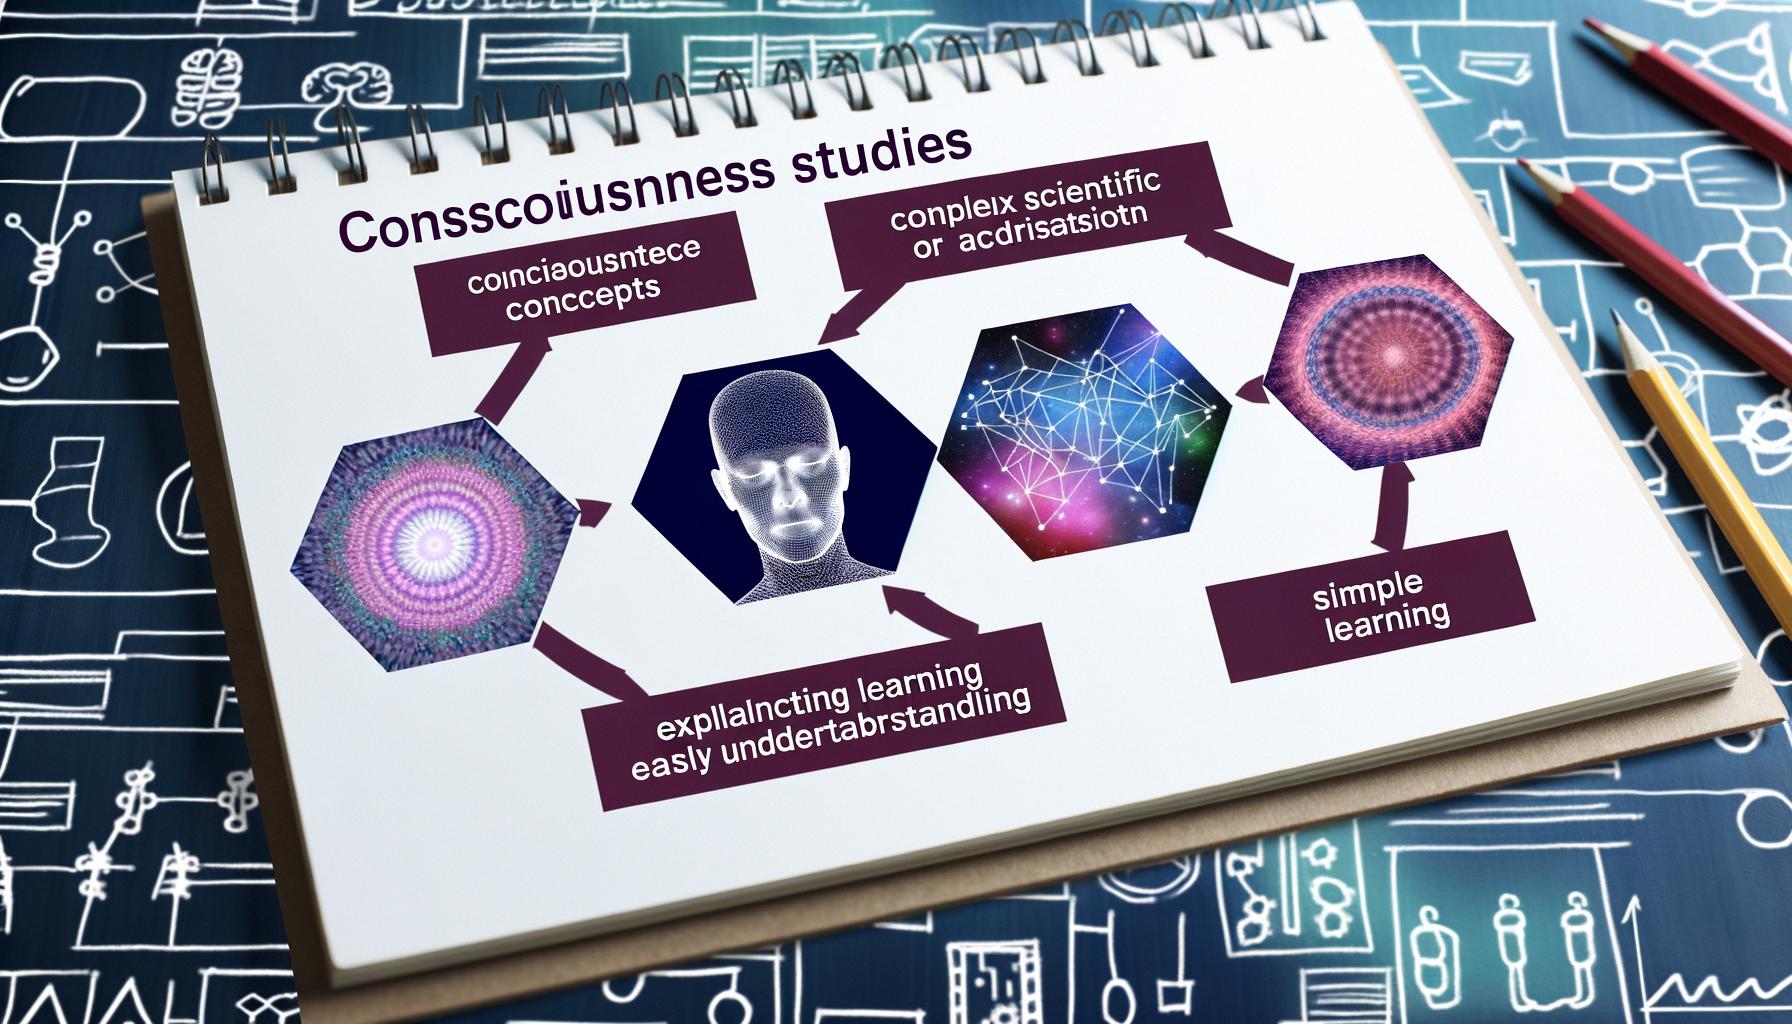 Advancements in consciousness studies challenge current understanding